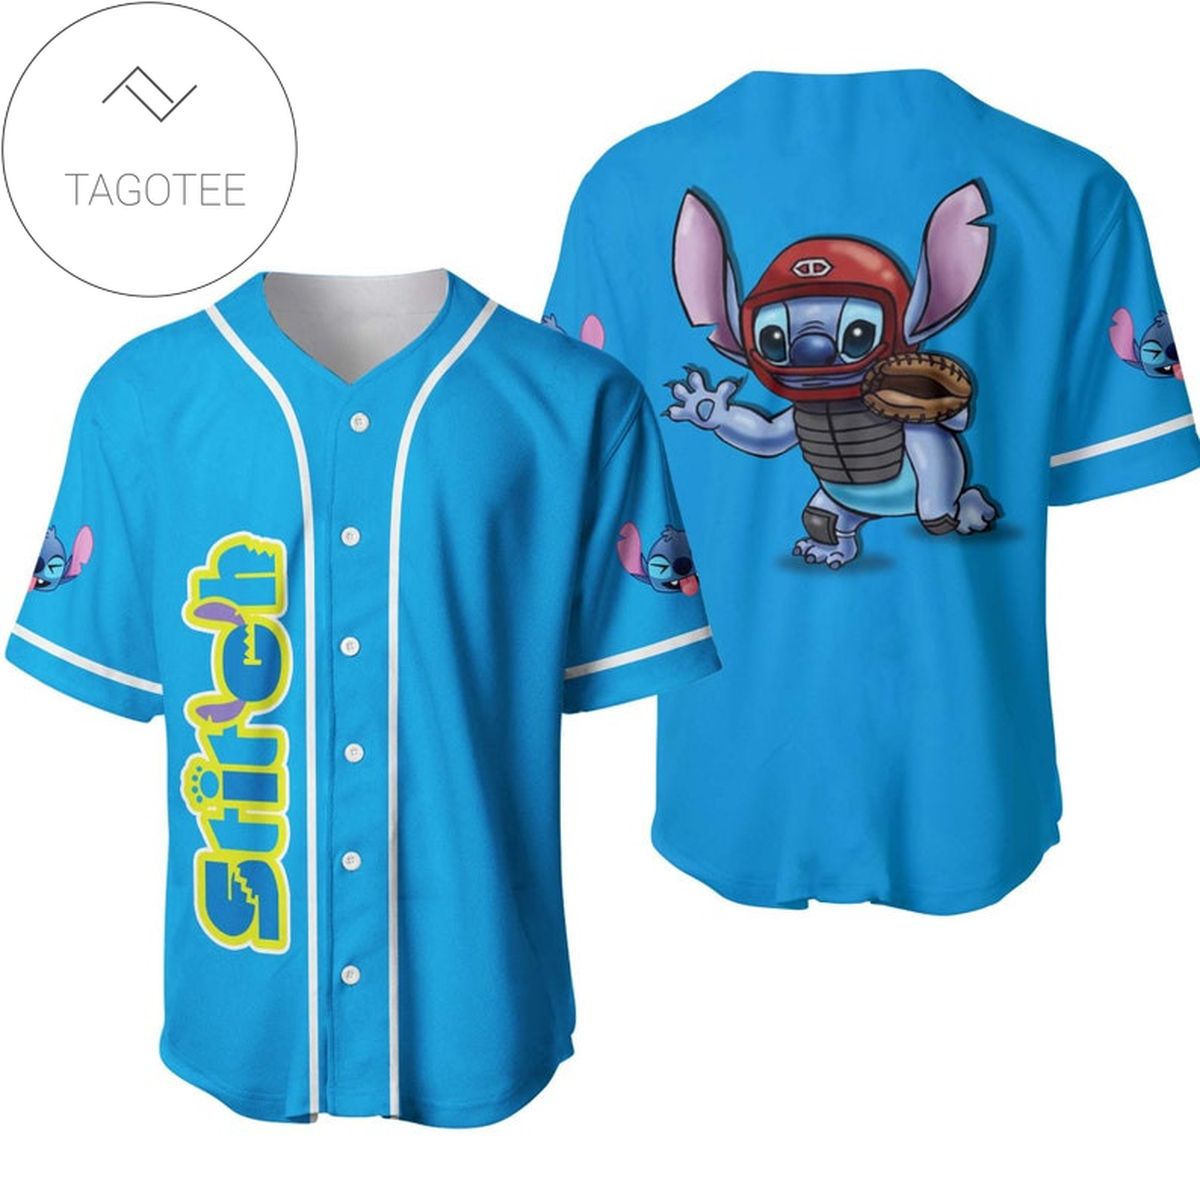 Stitch The Catcher All Over Print Baseball Jersey - Blue